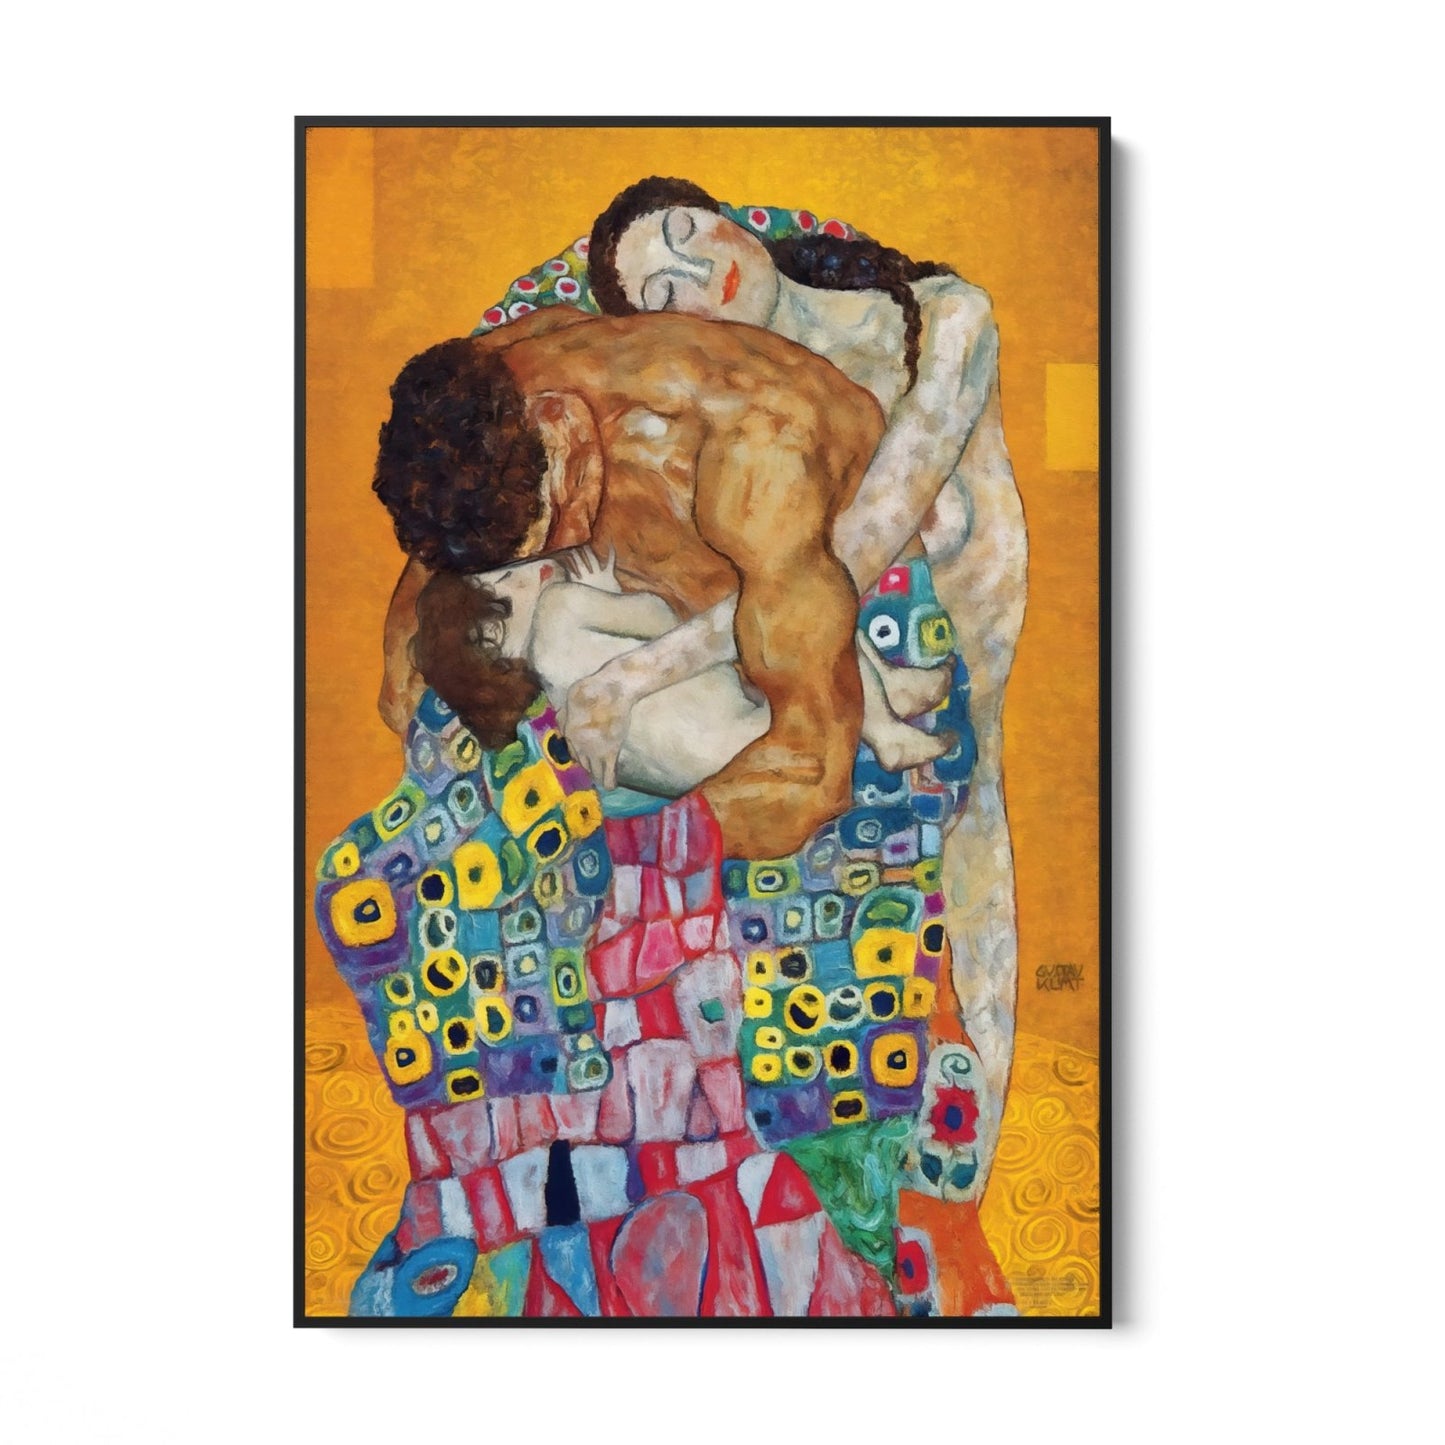 Rodina, Klimt